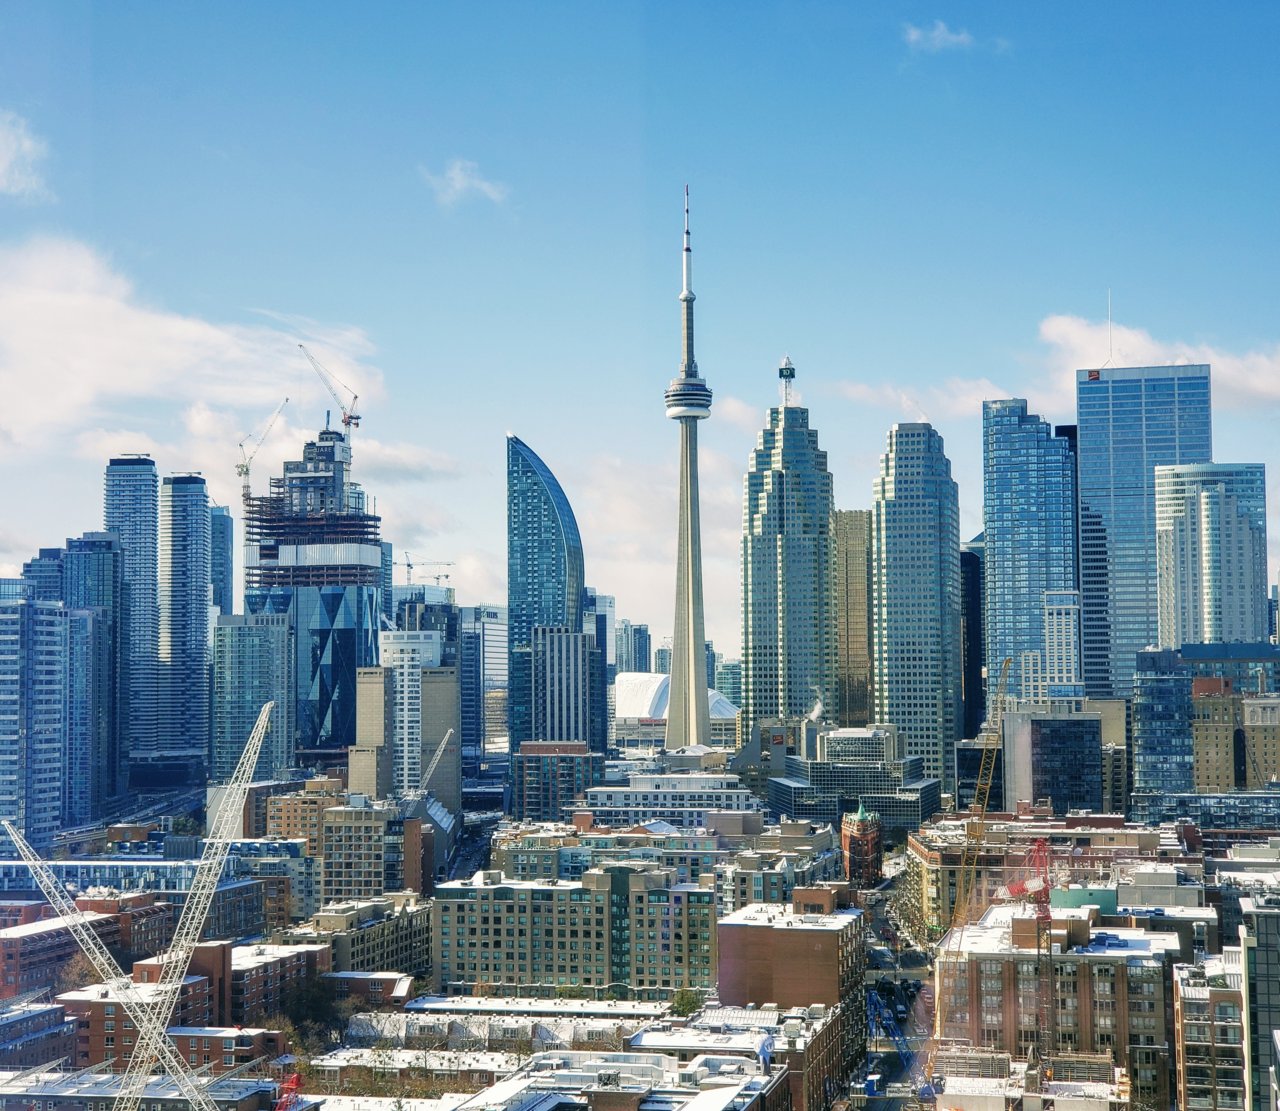 CIBC SQUARE Adds to Toronto Skyline View | UrbanToronto